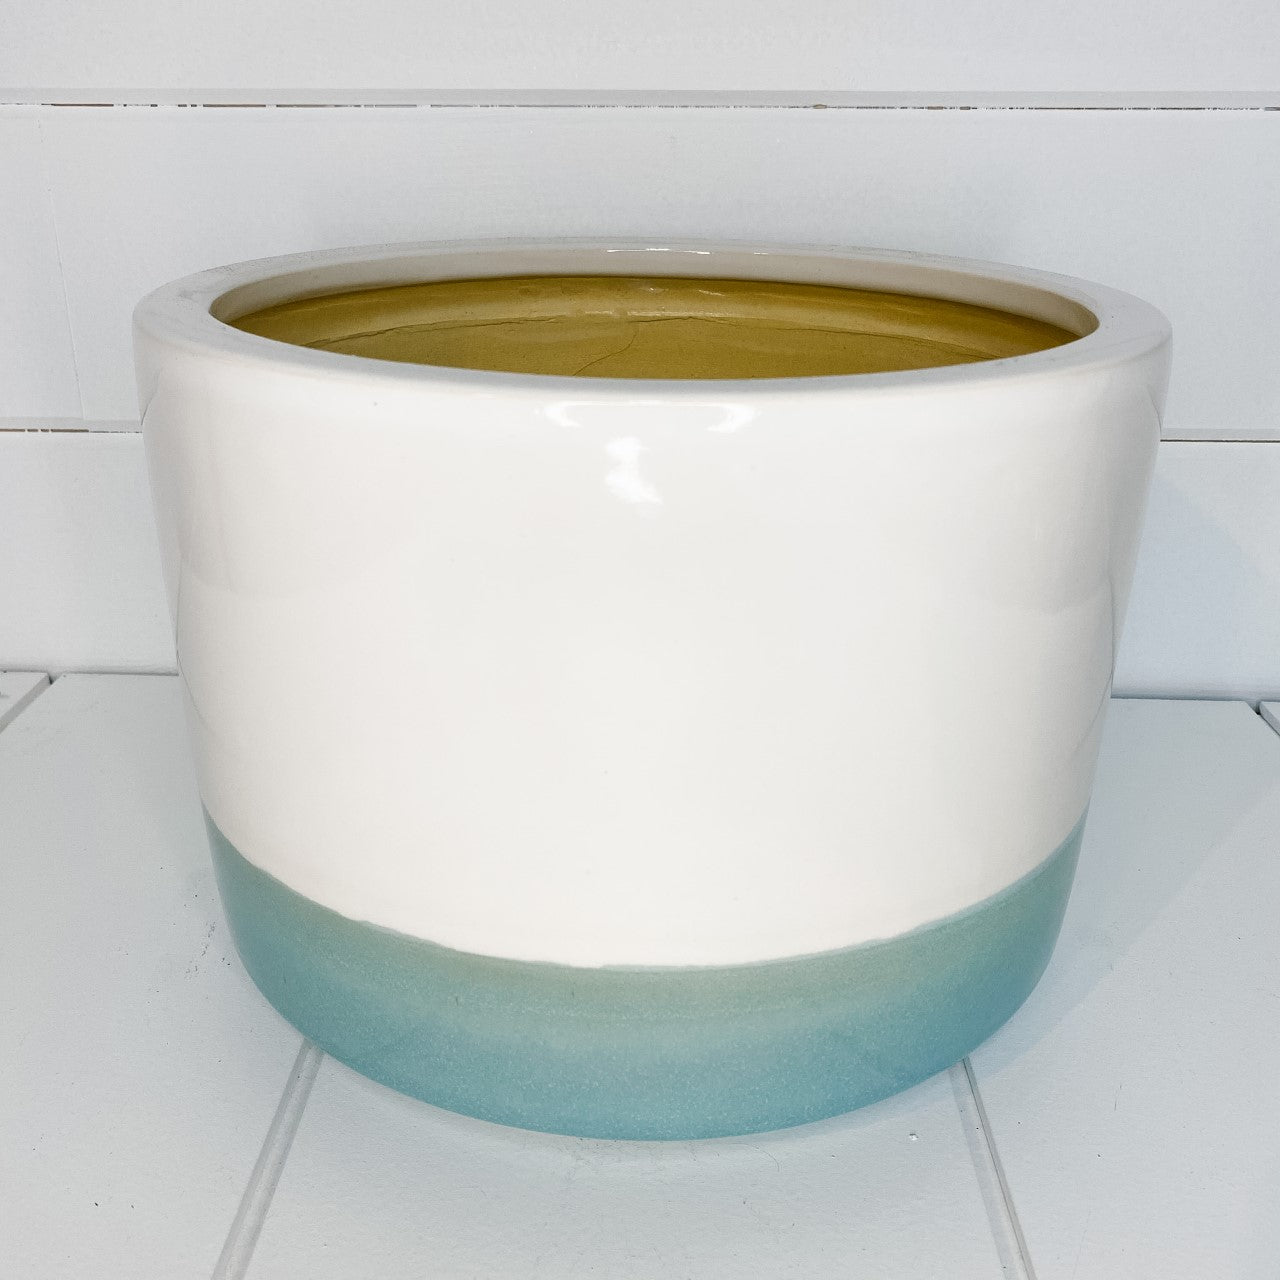 White/teal ceramic planter